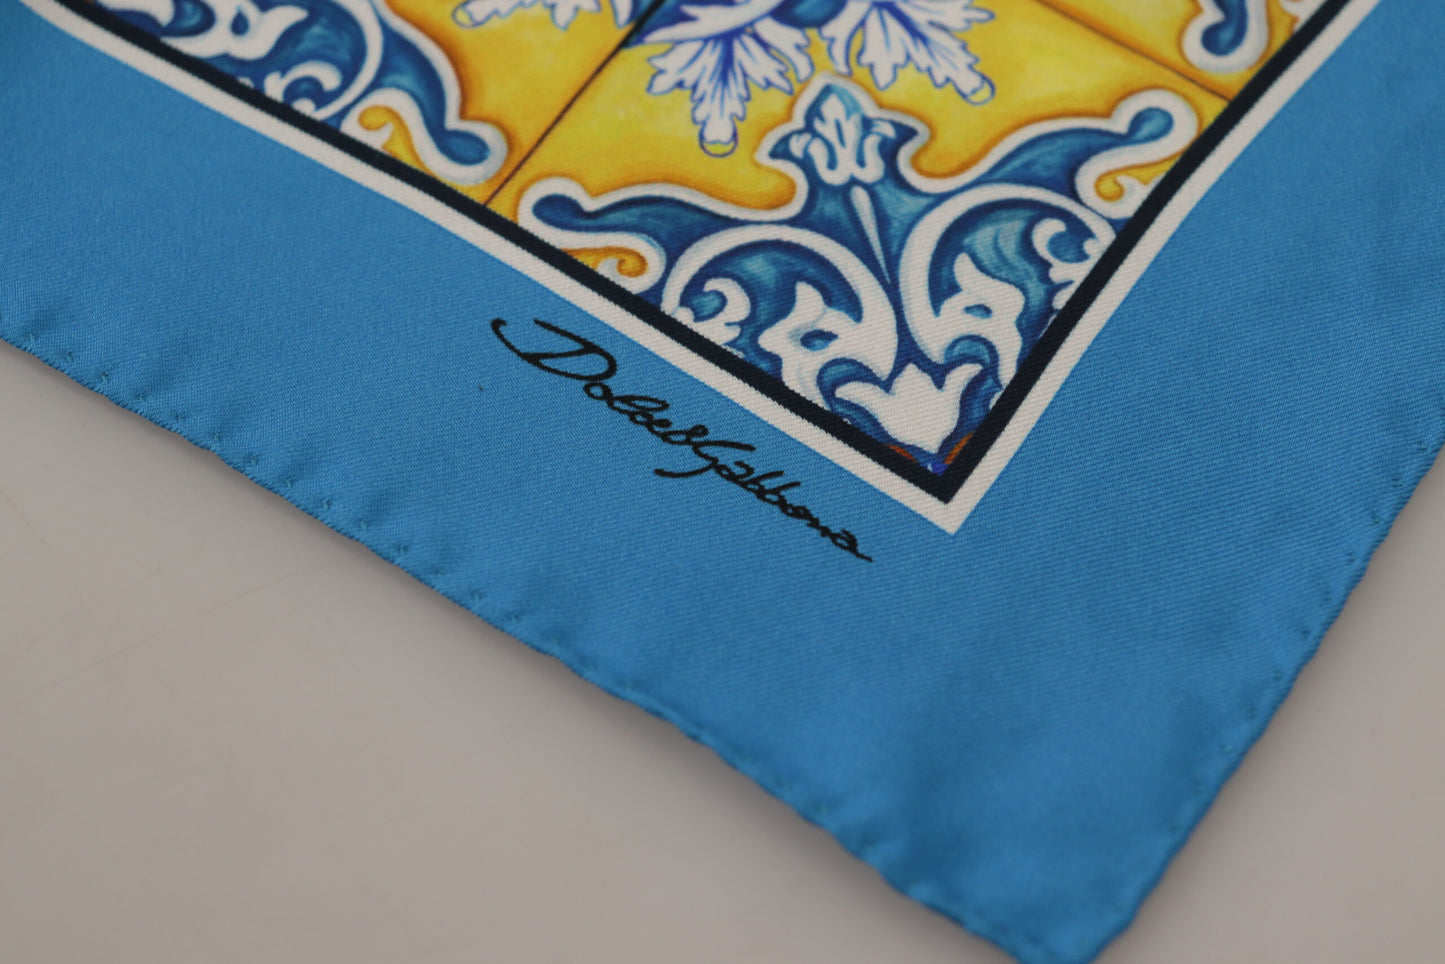 Dolce & Gabbana Blue Majolica Pattern Squakerchief Scarf